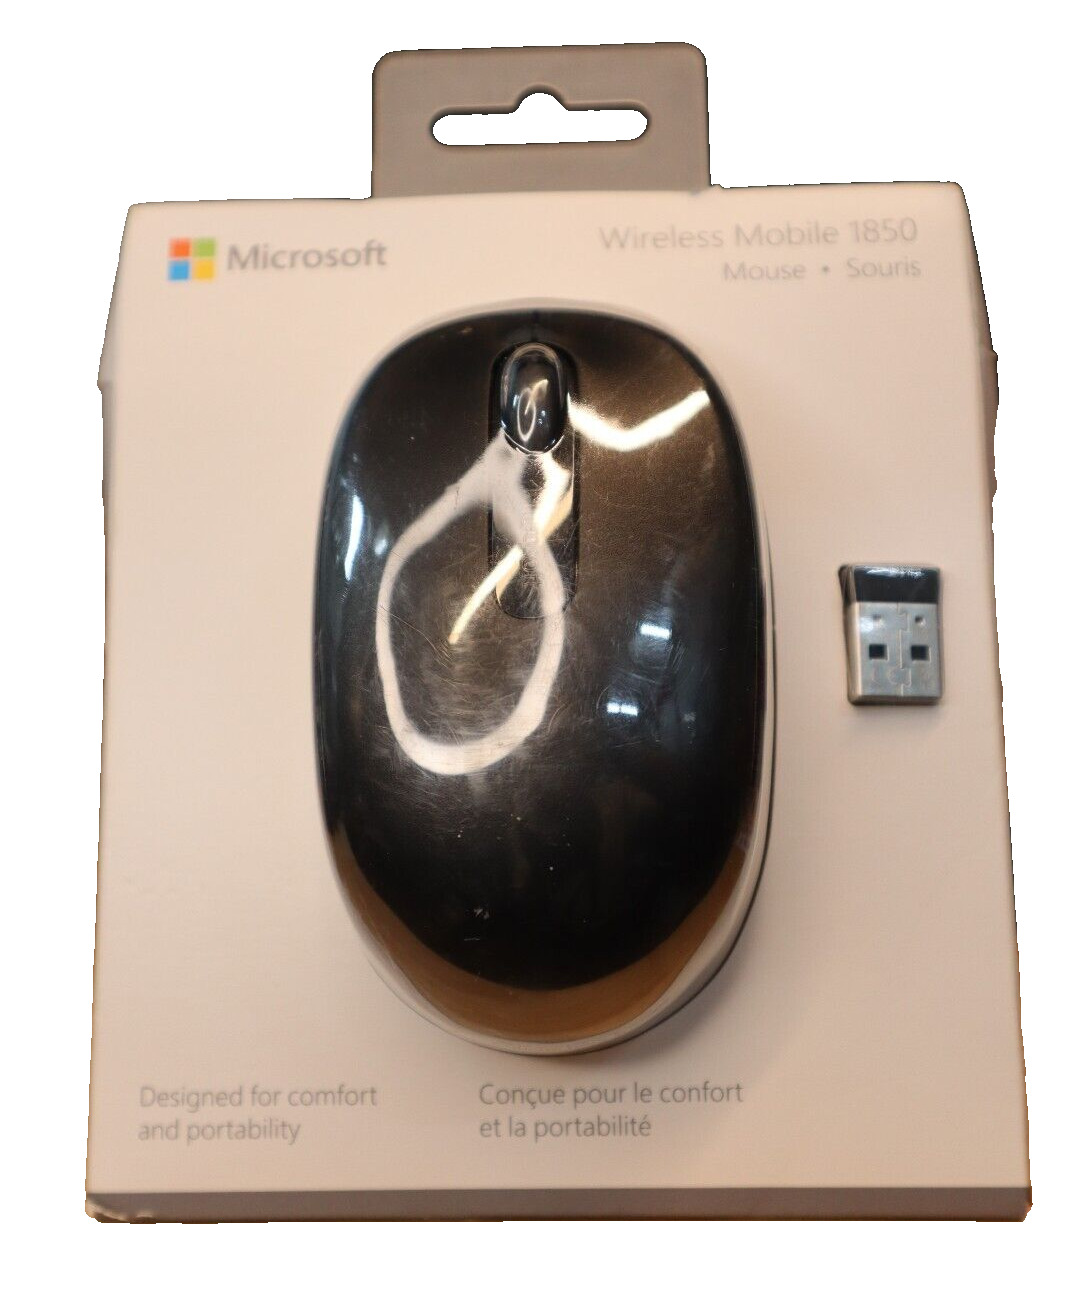 Microsoft 1850 (U7Z00001) Wireless Mobile Mouse